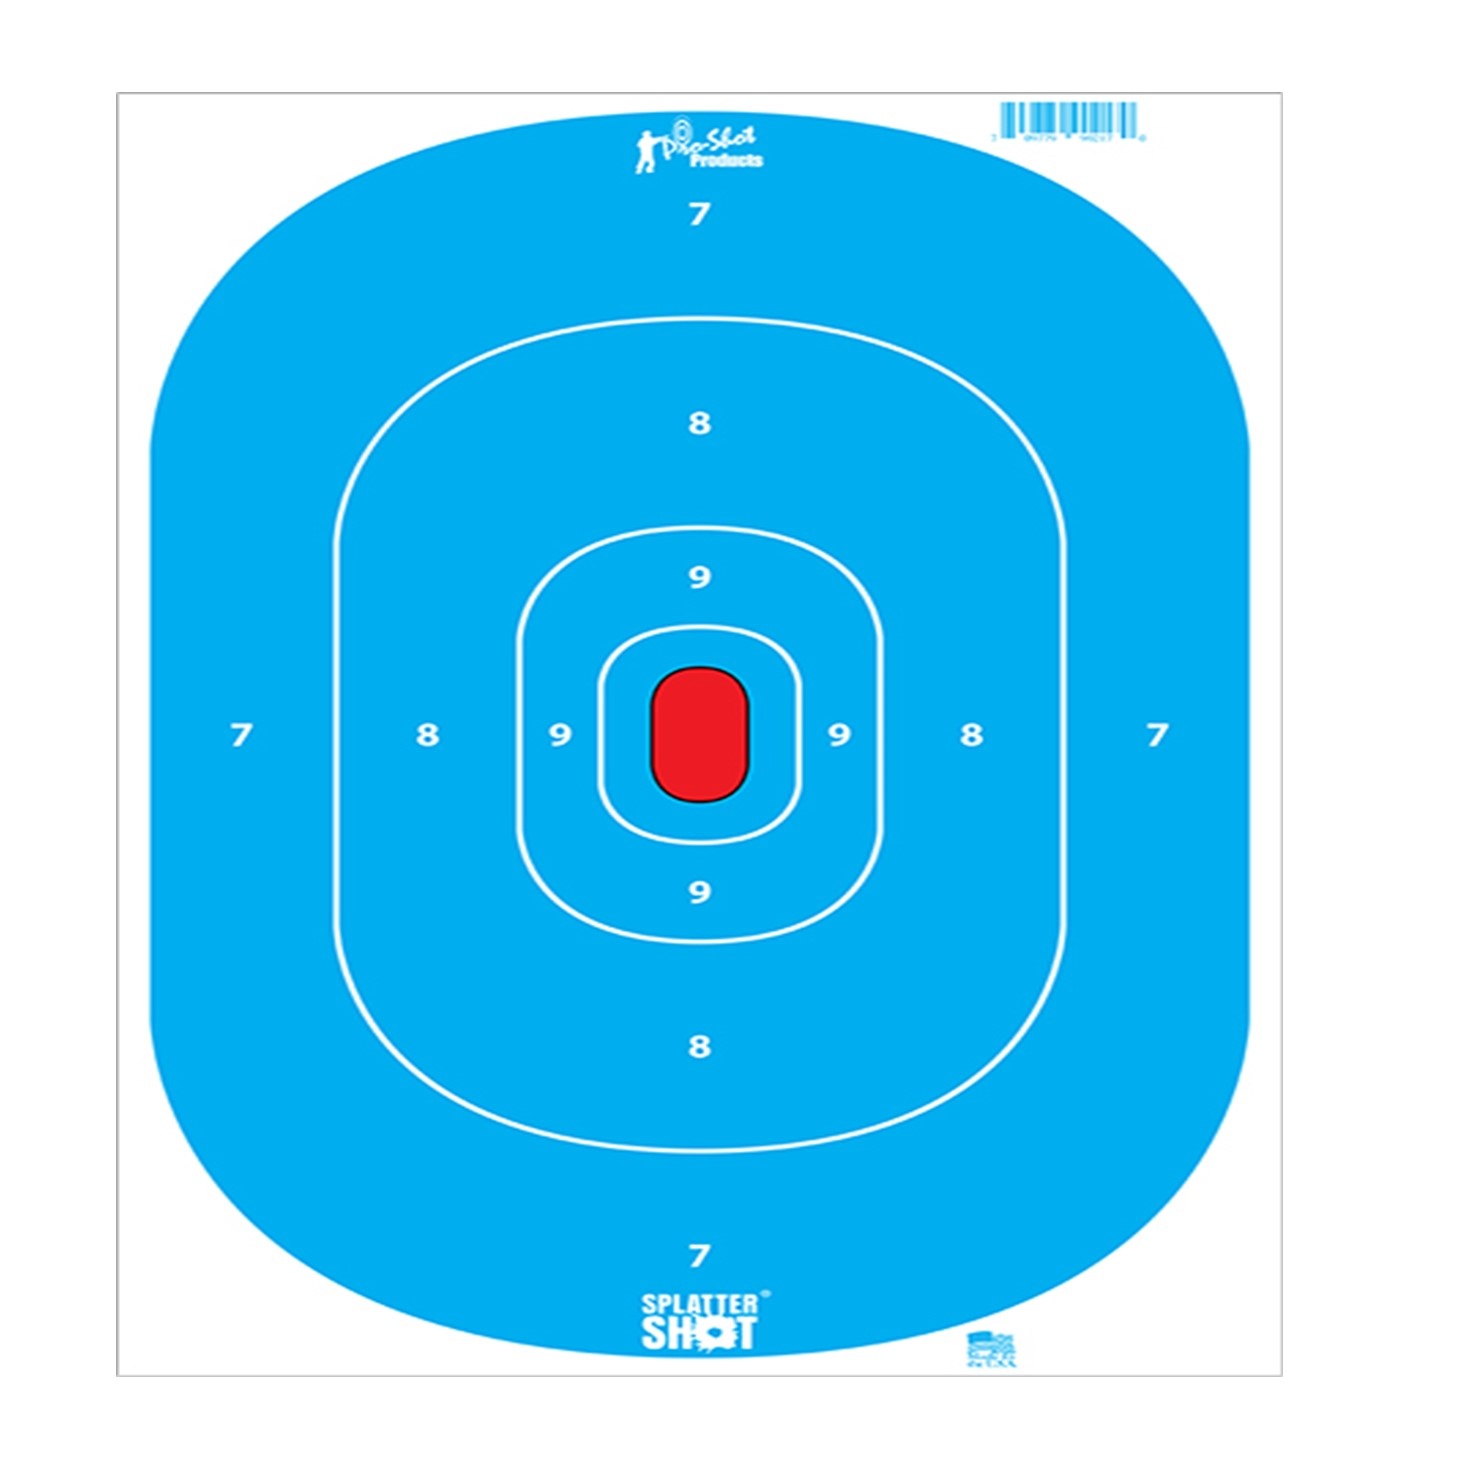 Pro-Shot 12" x 18" SplatterShot  Silhouette Insert - Low Light/Hi-Vis Blue Tag Paper Target - 8 Pack